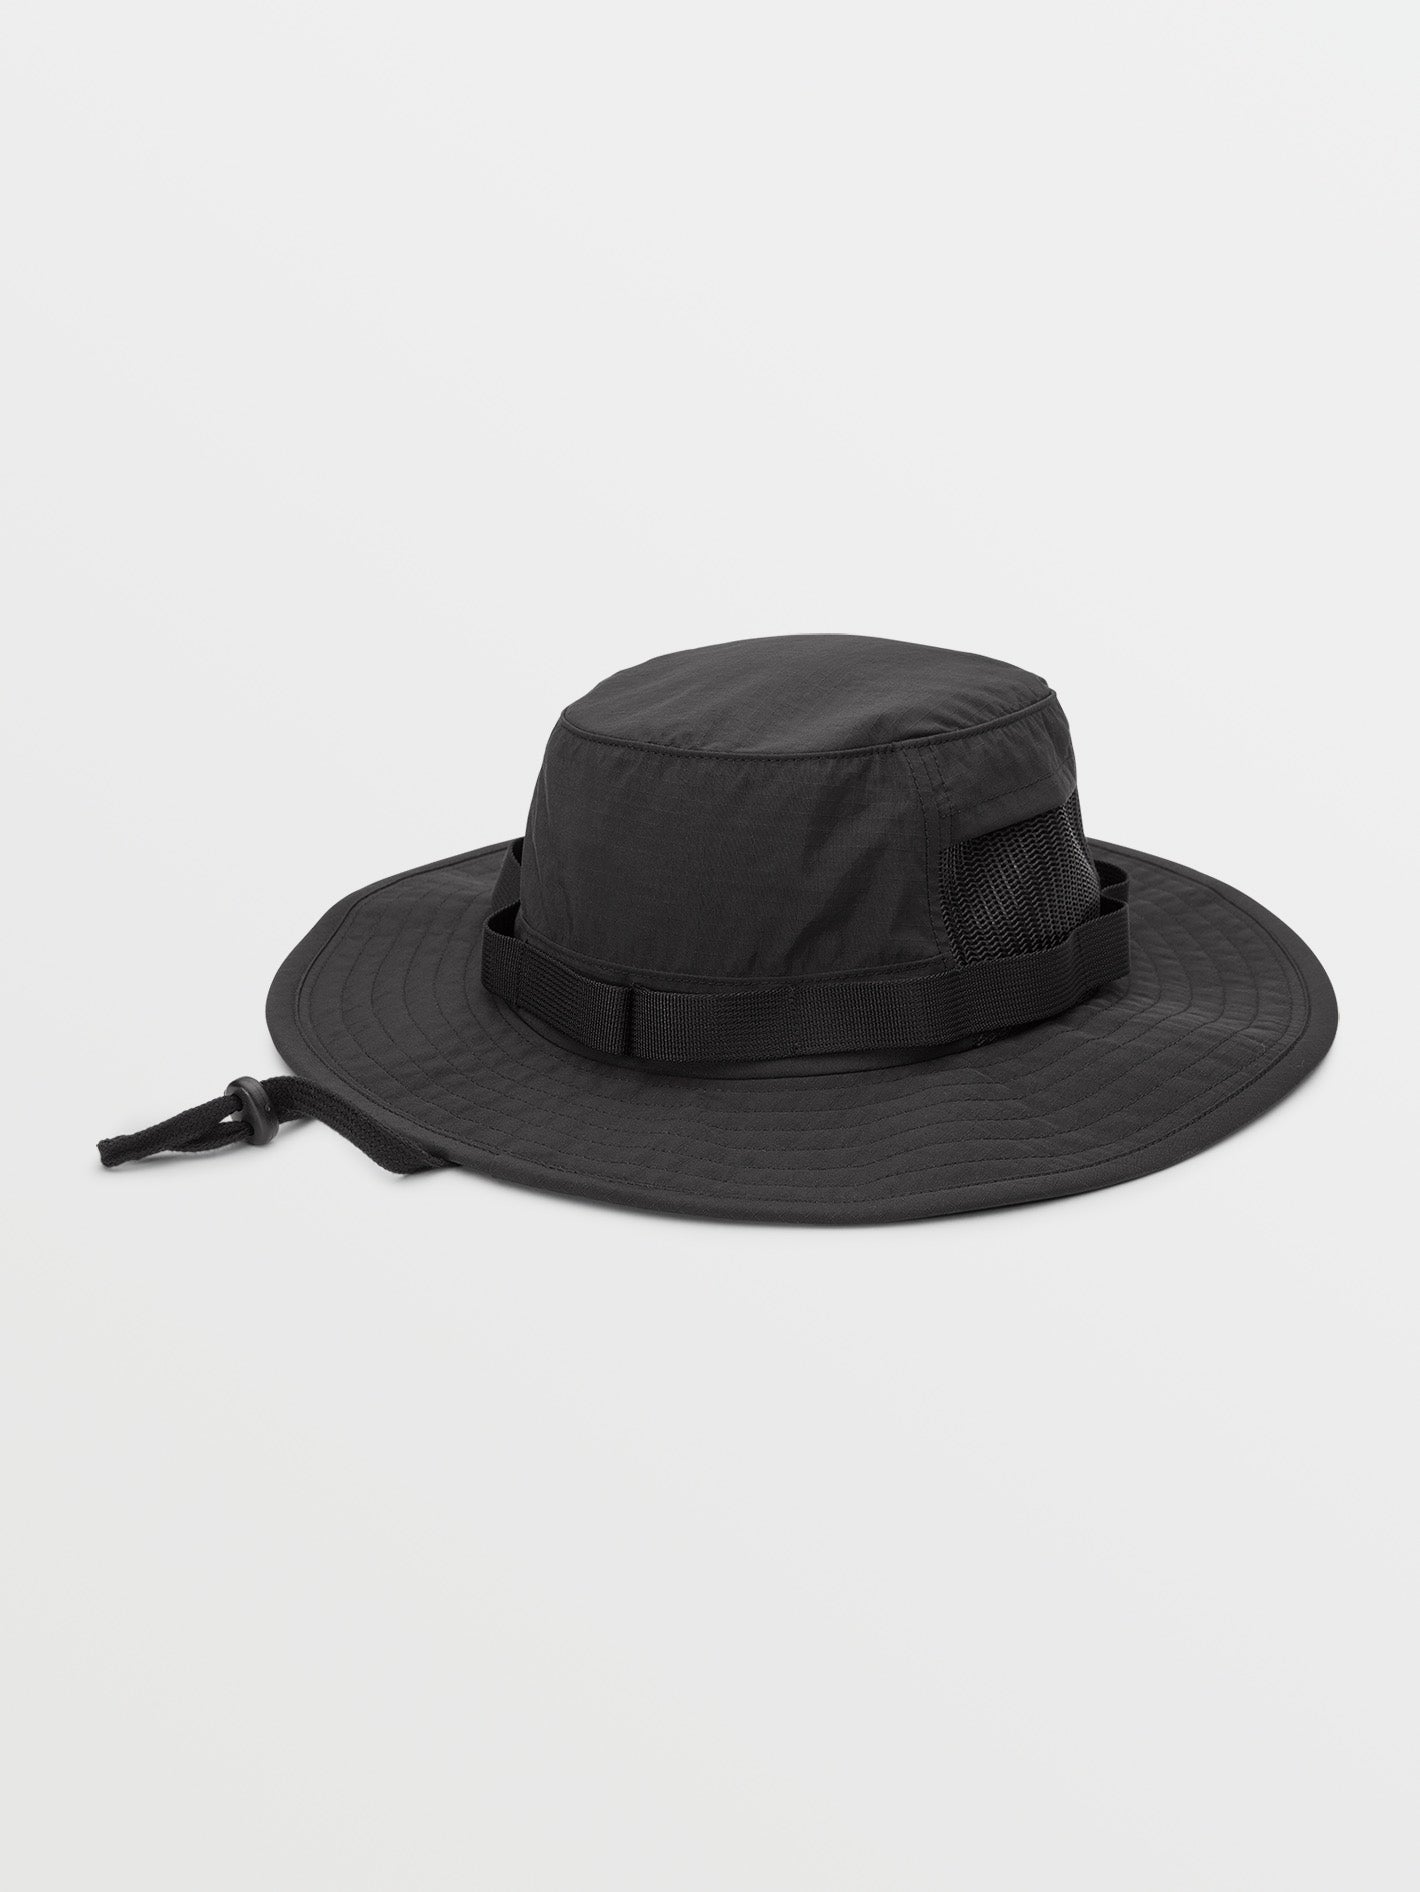 Volcom Workwear Boonie Men's Hat, Black, Size O/S